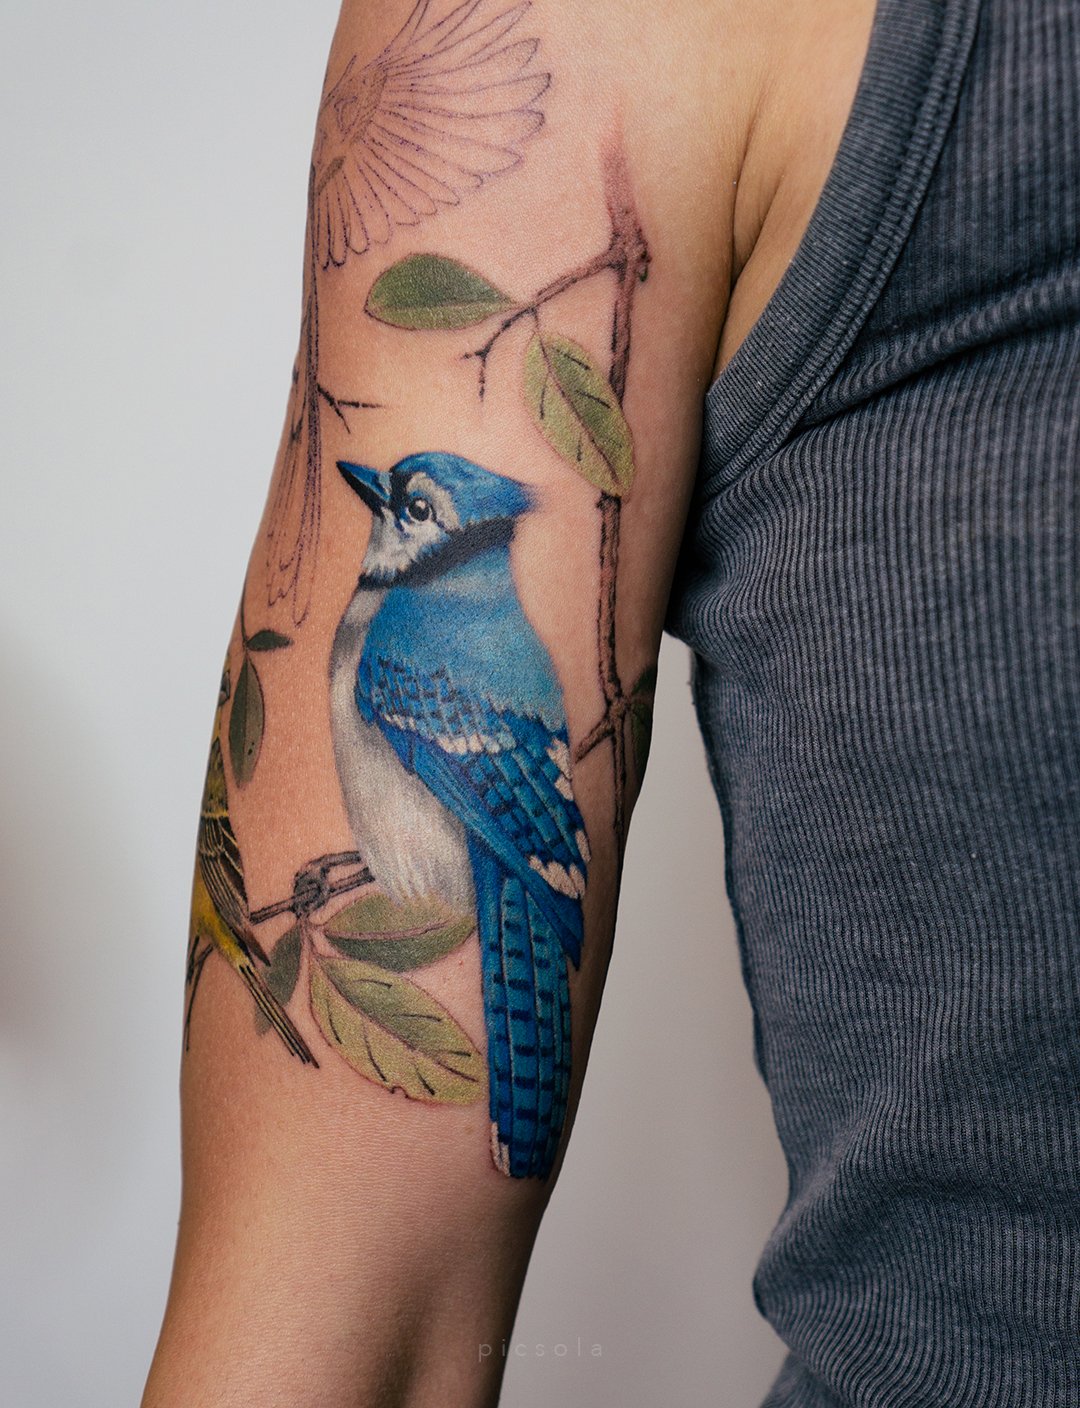 Shoulder Realistic Bird Tattoo by Piranha Tattoo Studio